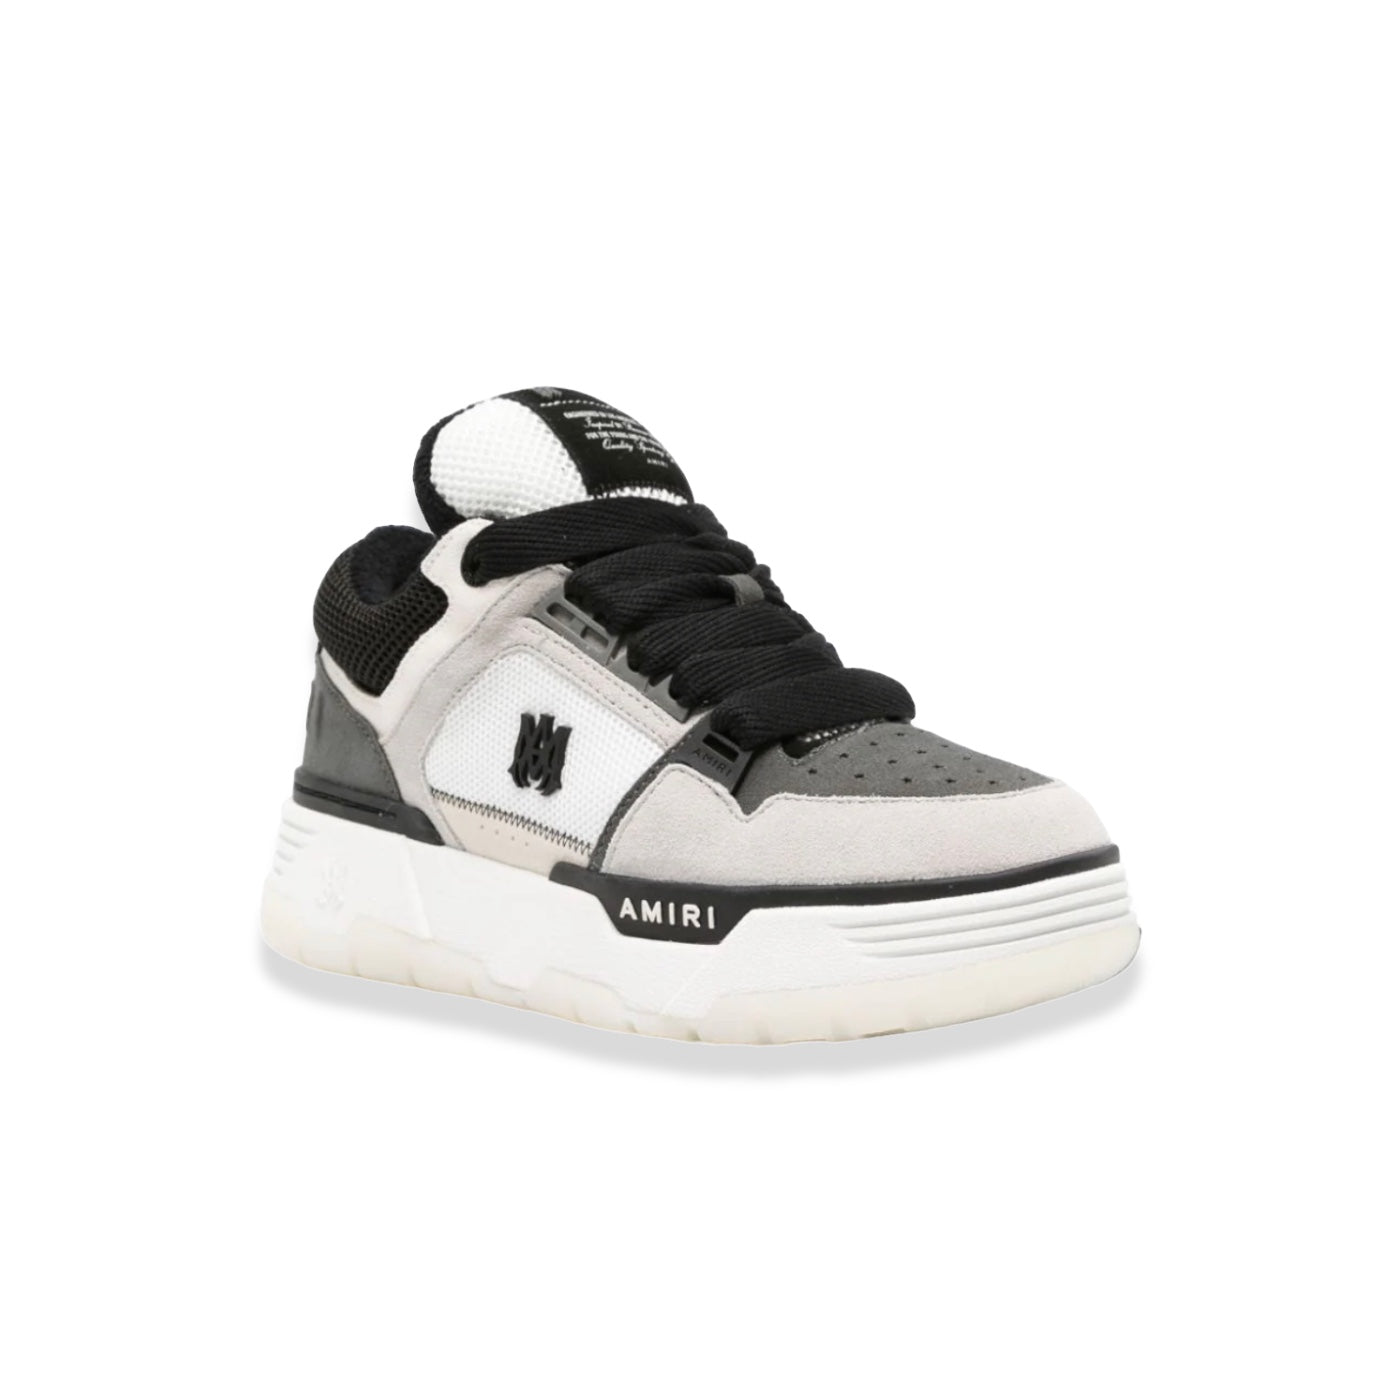 Amiri - MA1 Sneakers Grey